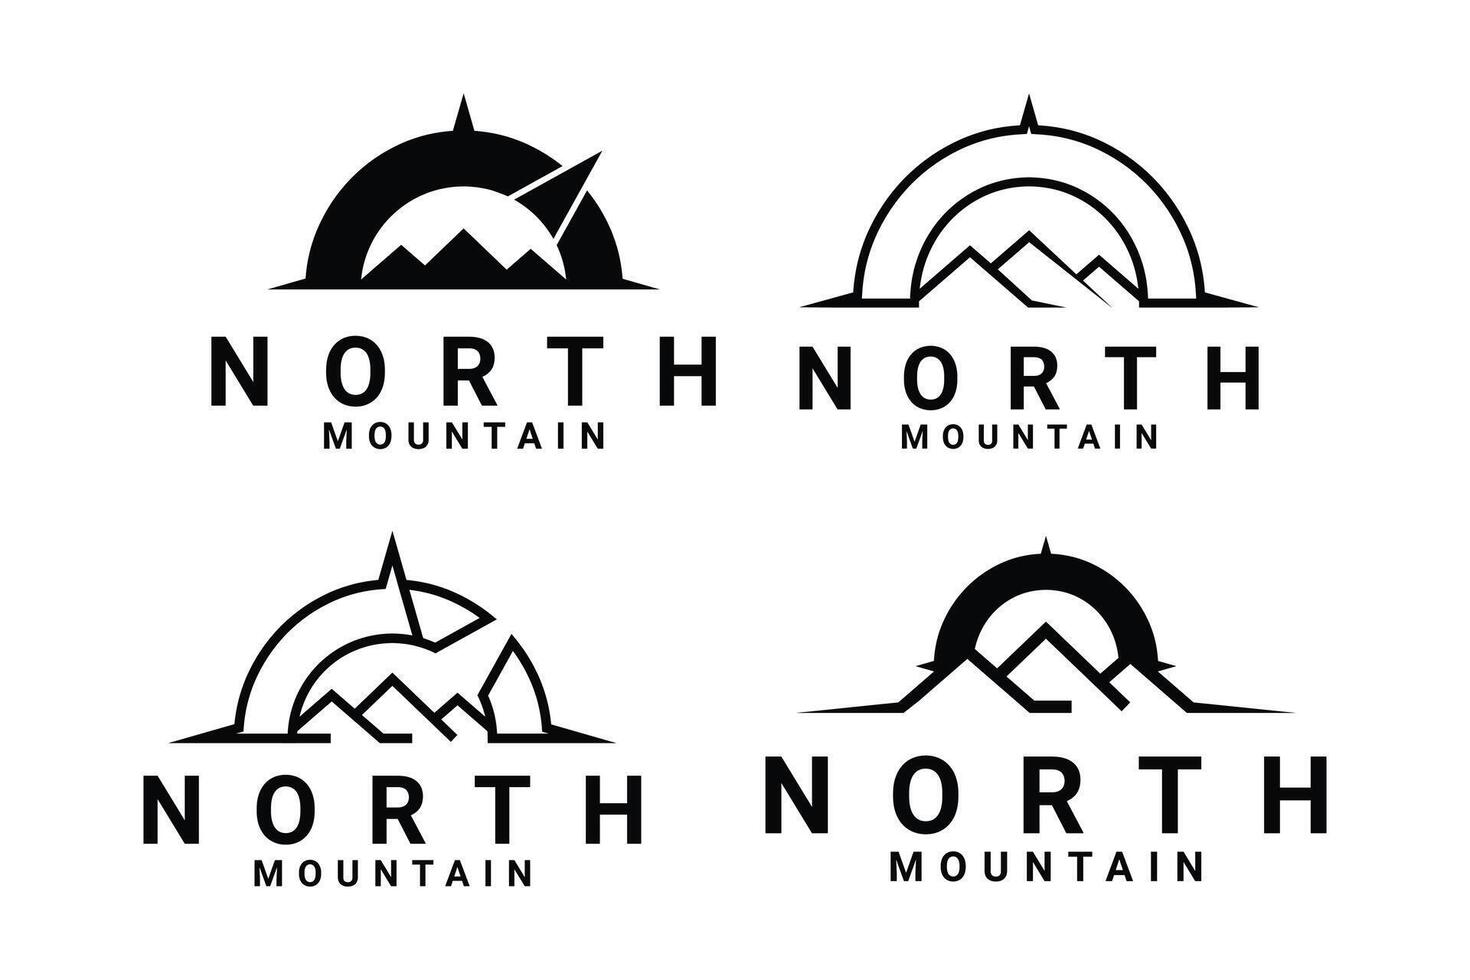 Nord Montagne logo conception concept, Nord Montagne logo conception ensemble collection vecteur